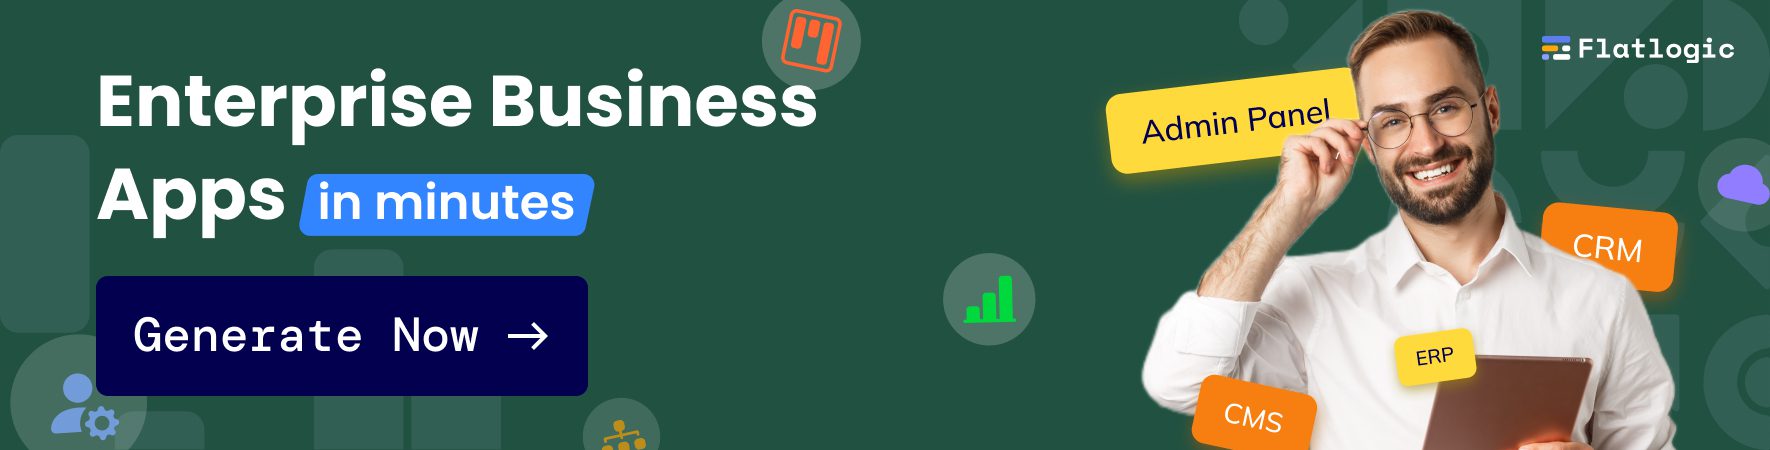 Enterprise Business Apps in minutes. Generate app!